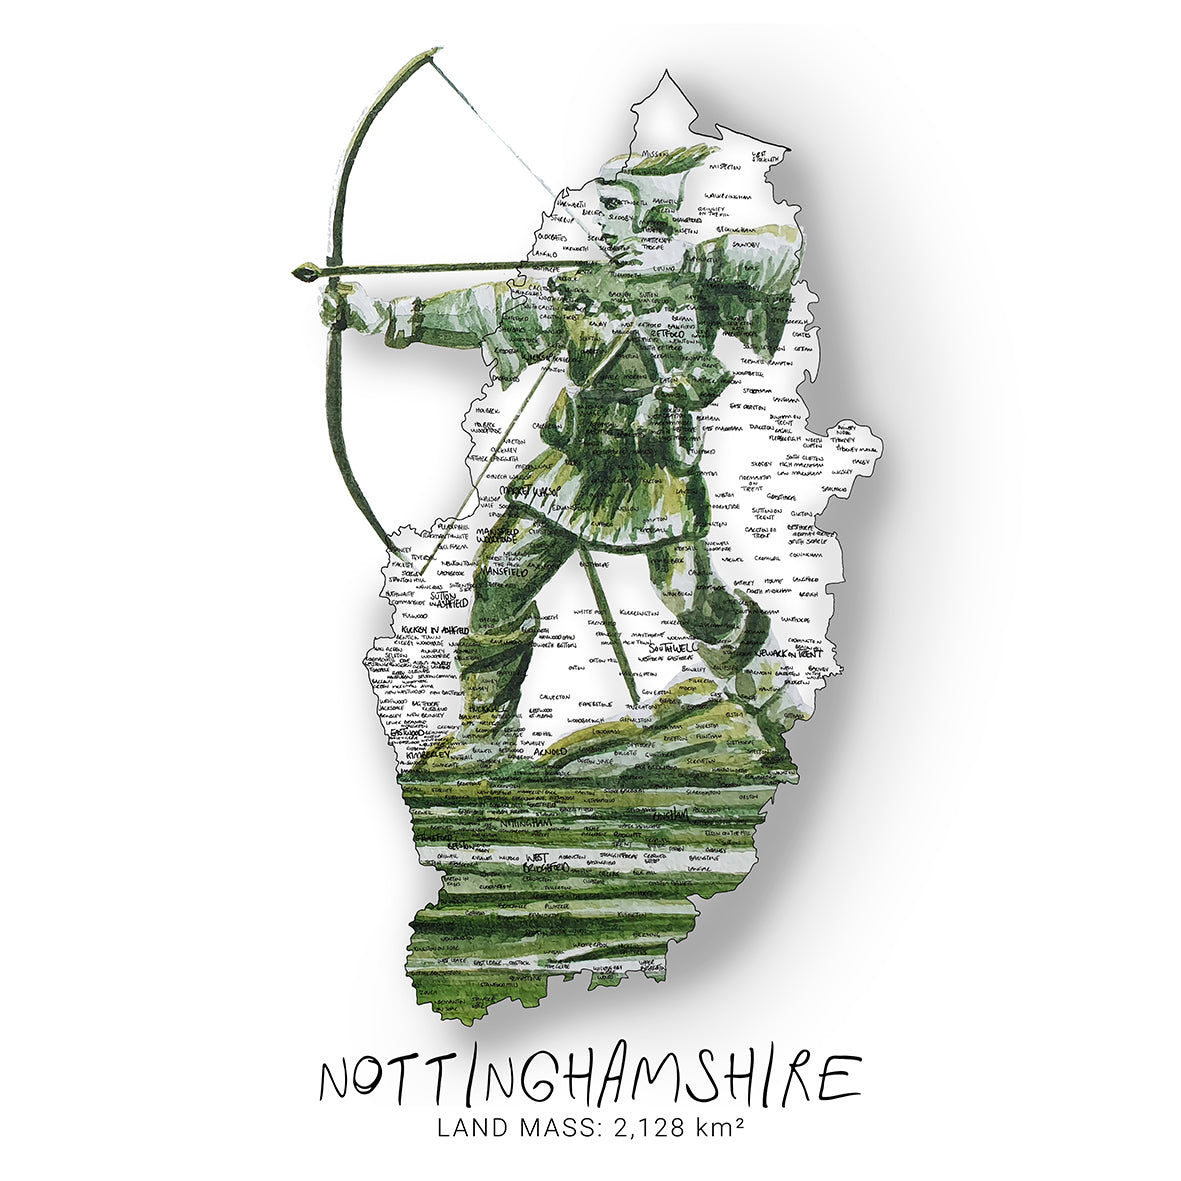 Nottingham Robin Hood Map Card